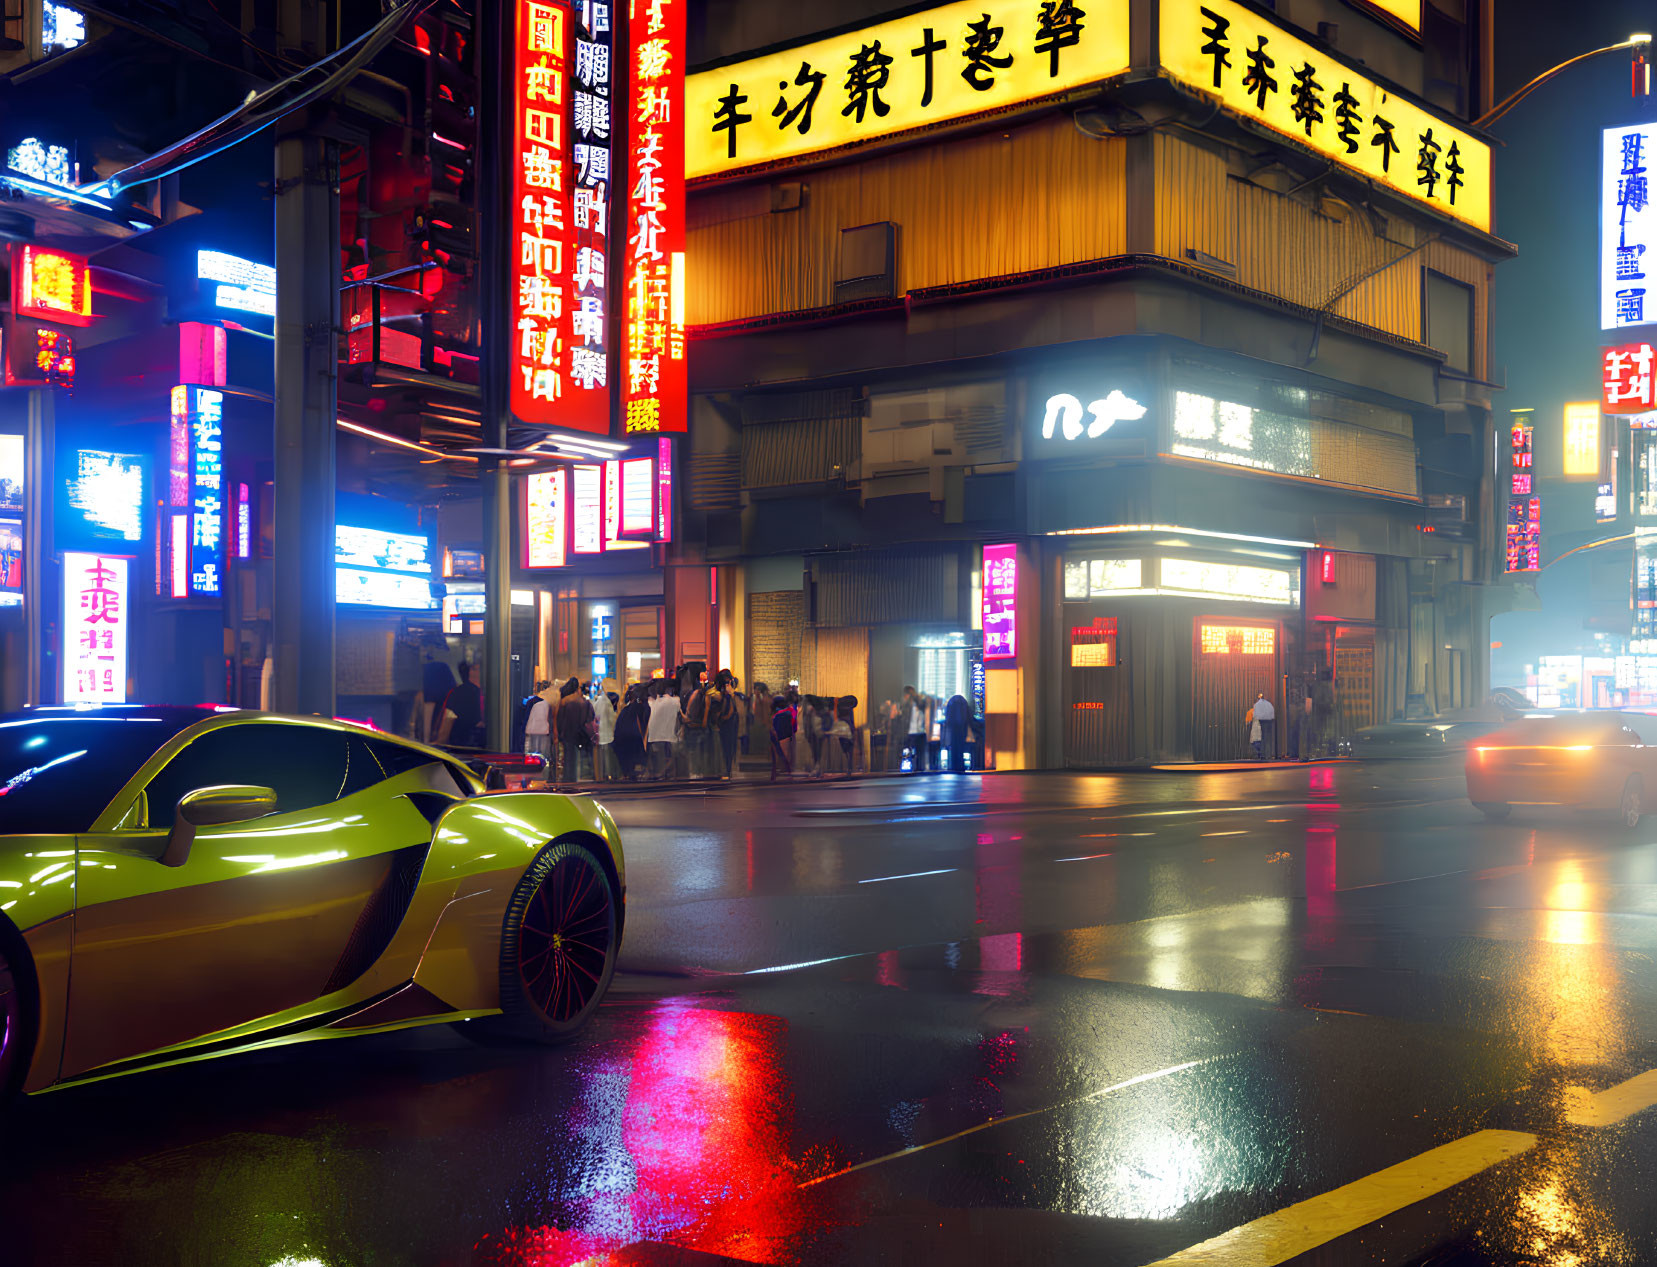 City street at night: Neon signs, sports car, pedestrians.